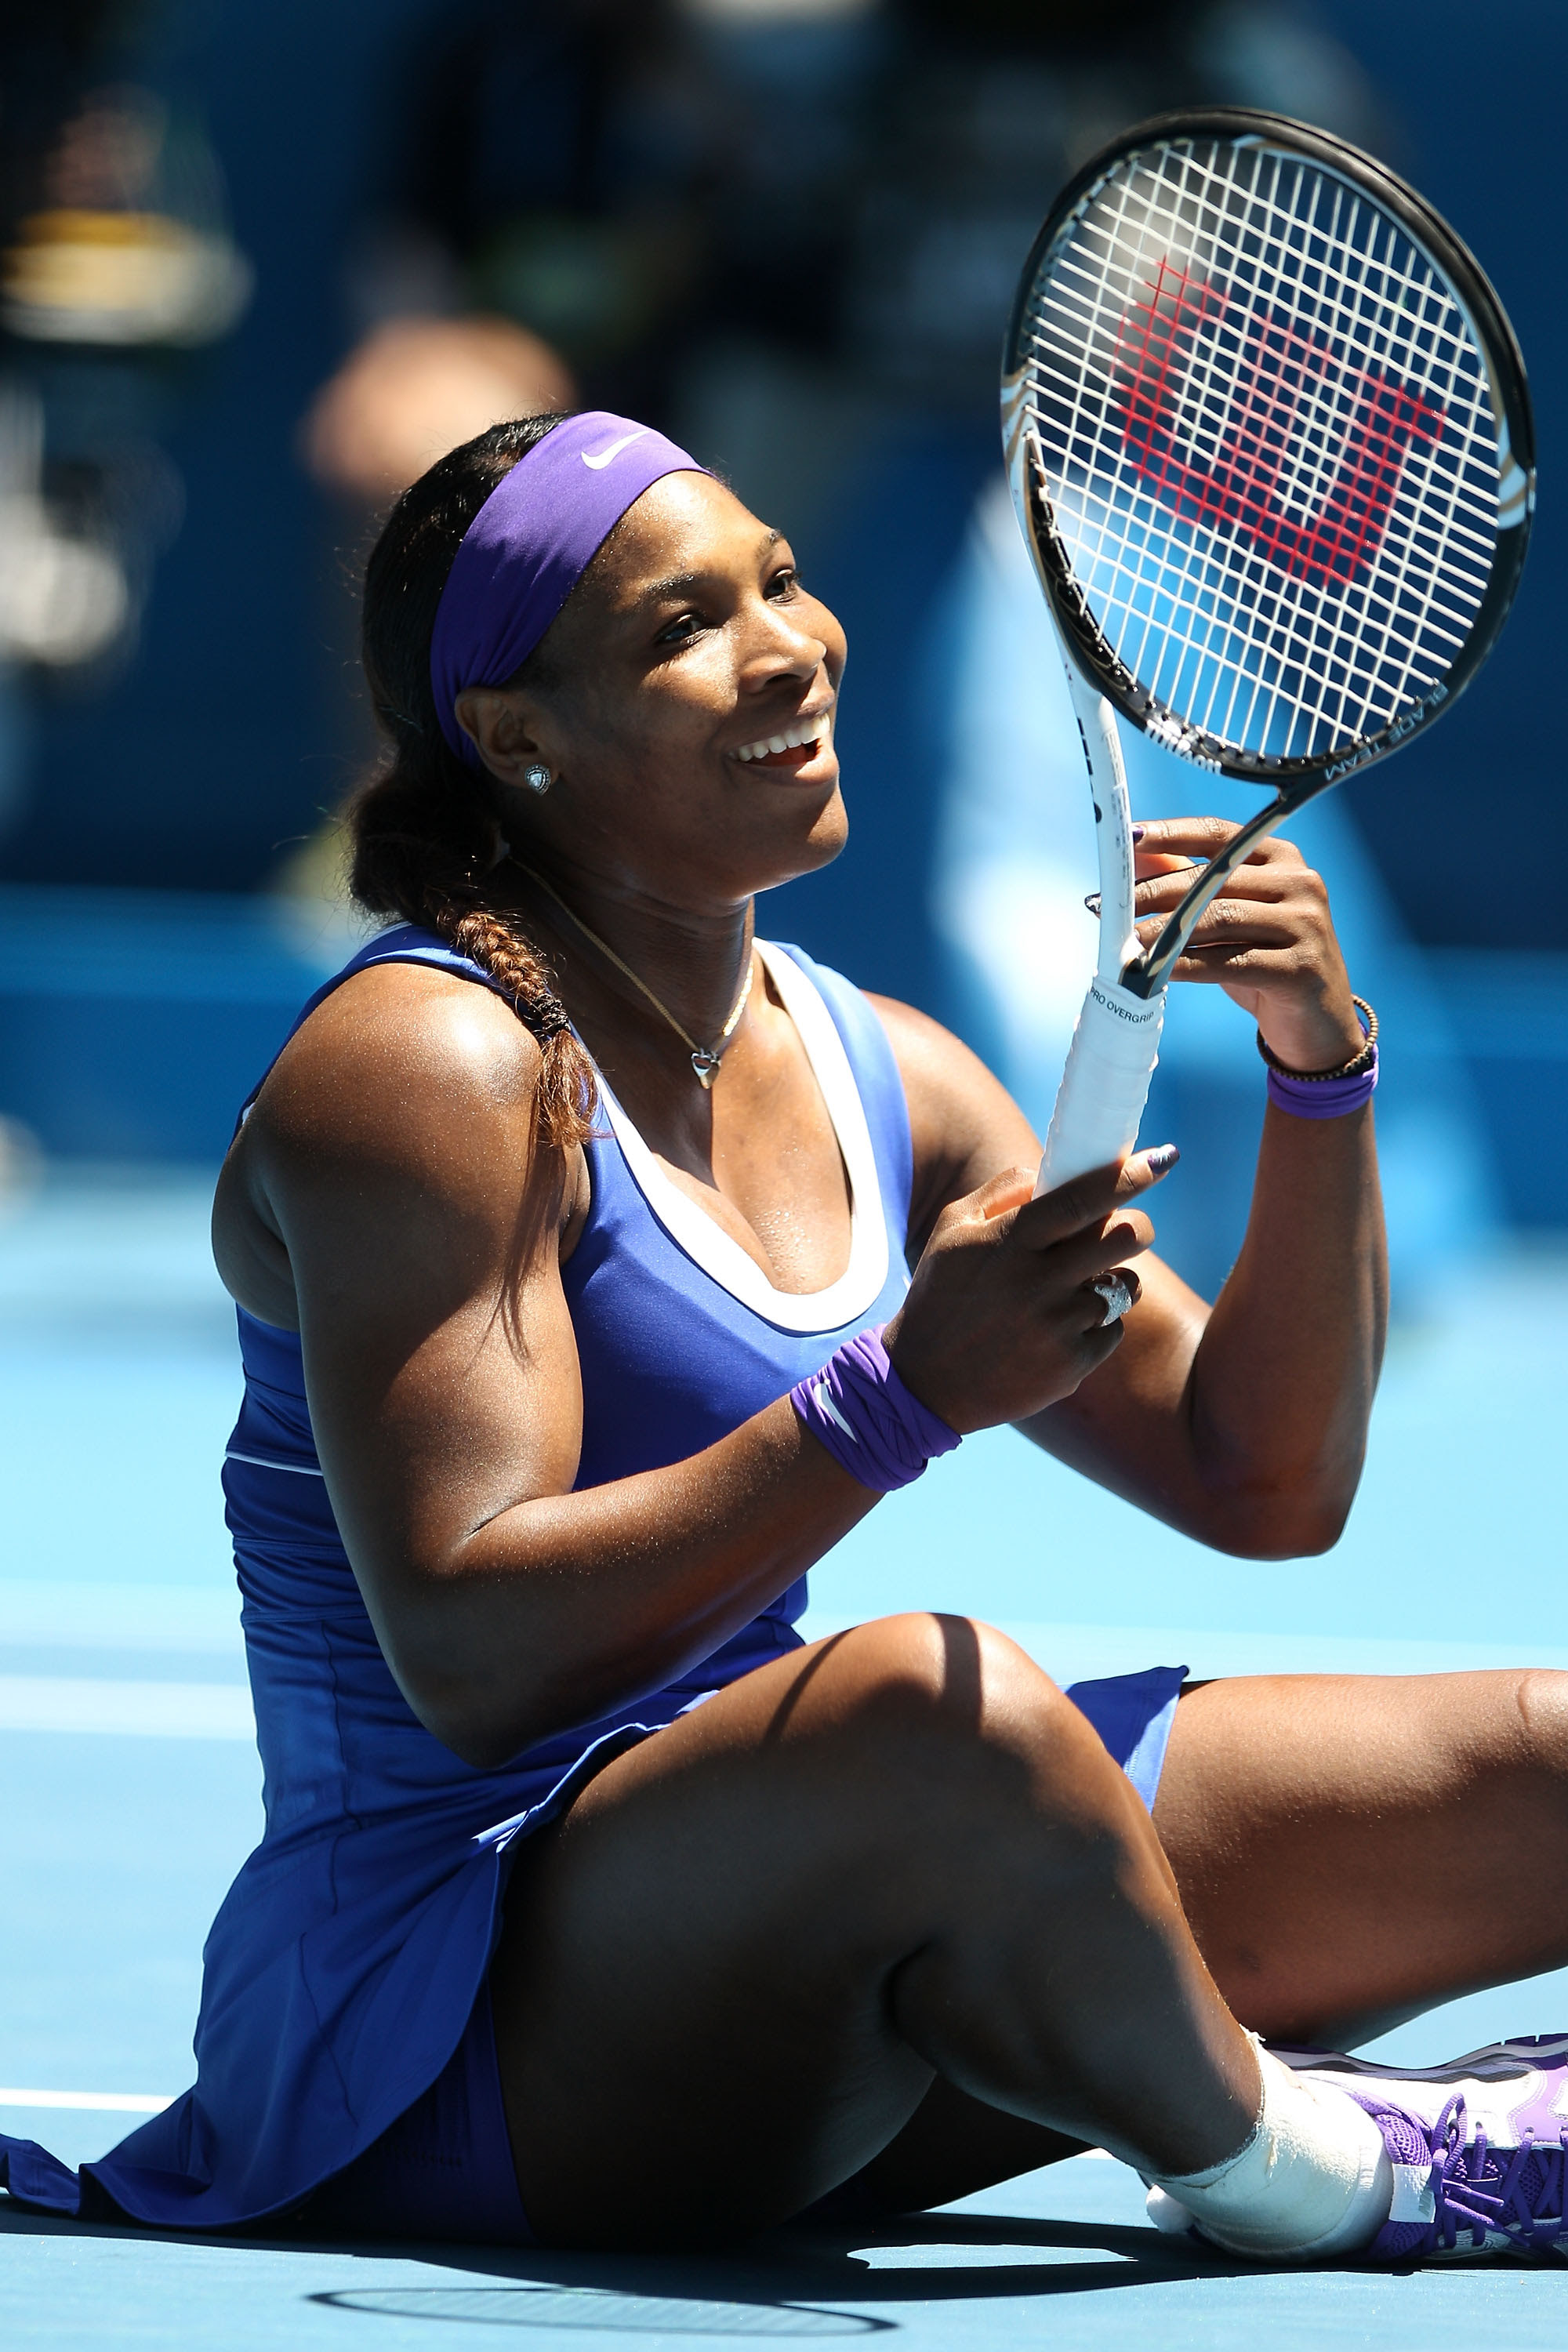 Recounting Serena Williams’ second-round win through photos